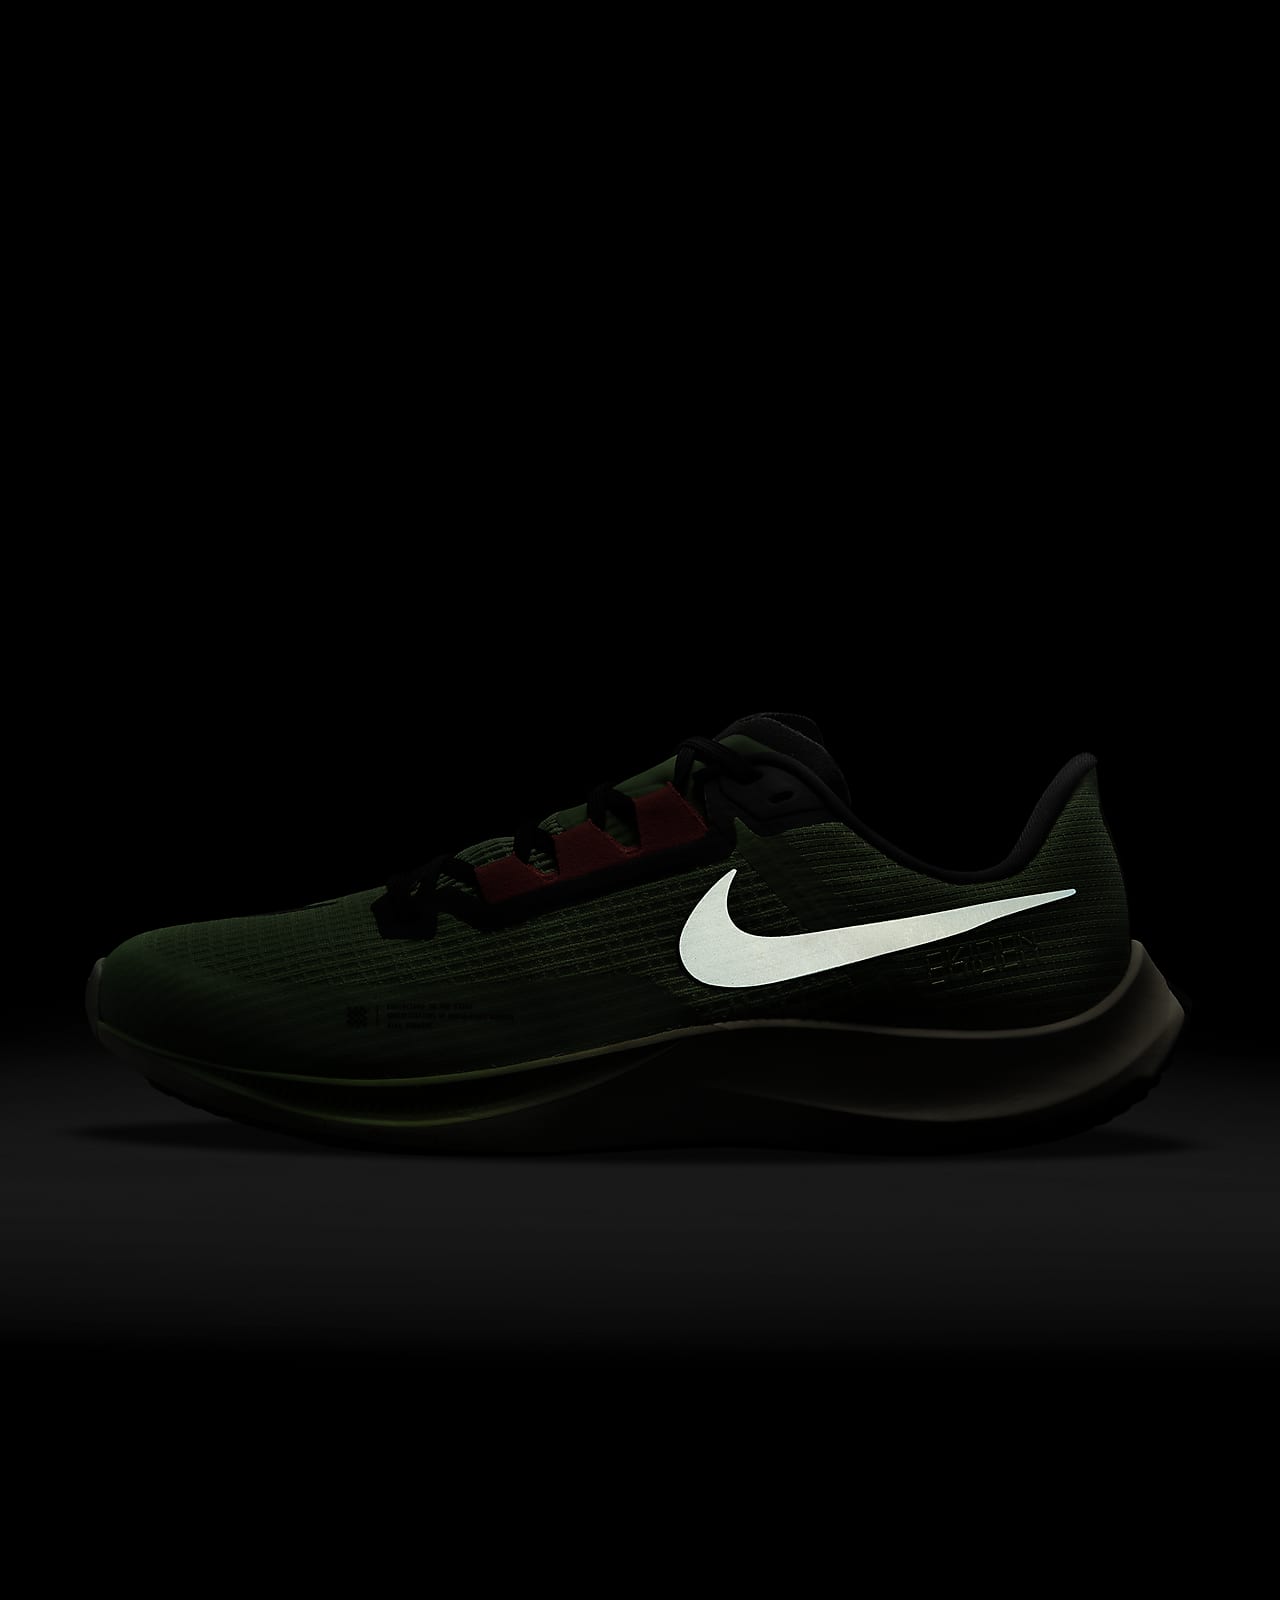 seguro Faringe Inútil Nike Air Zoom Rival Fly 3 Zapatillas de competición para asfalto - Hombre.  Nike ES